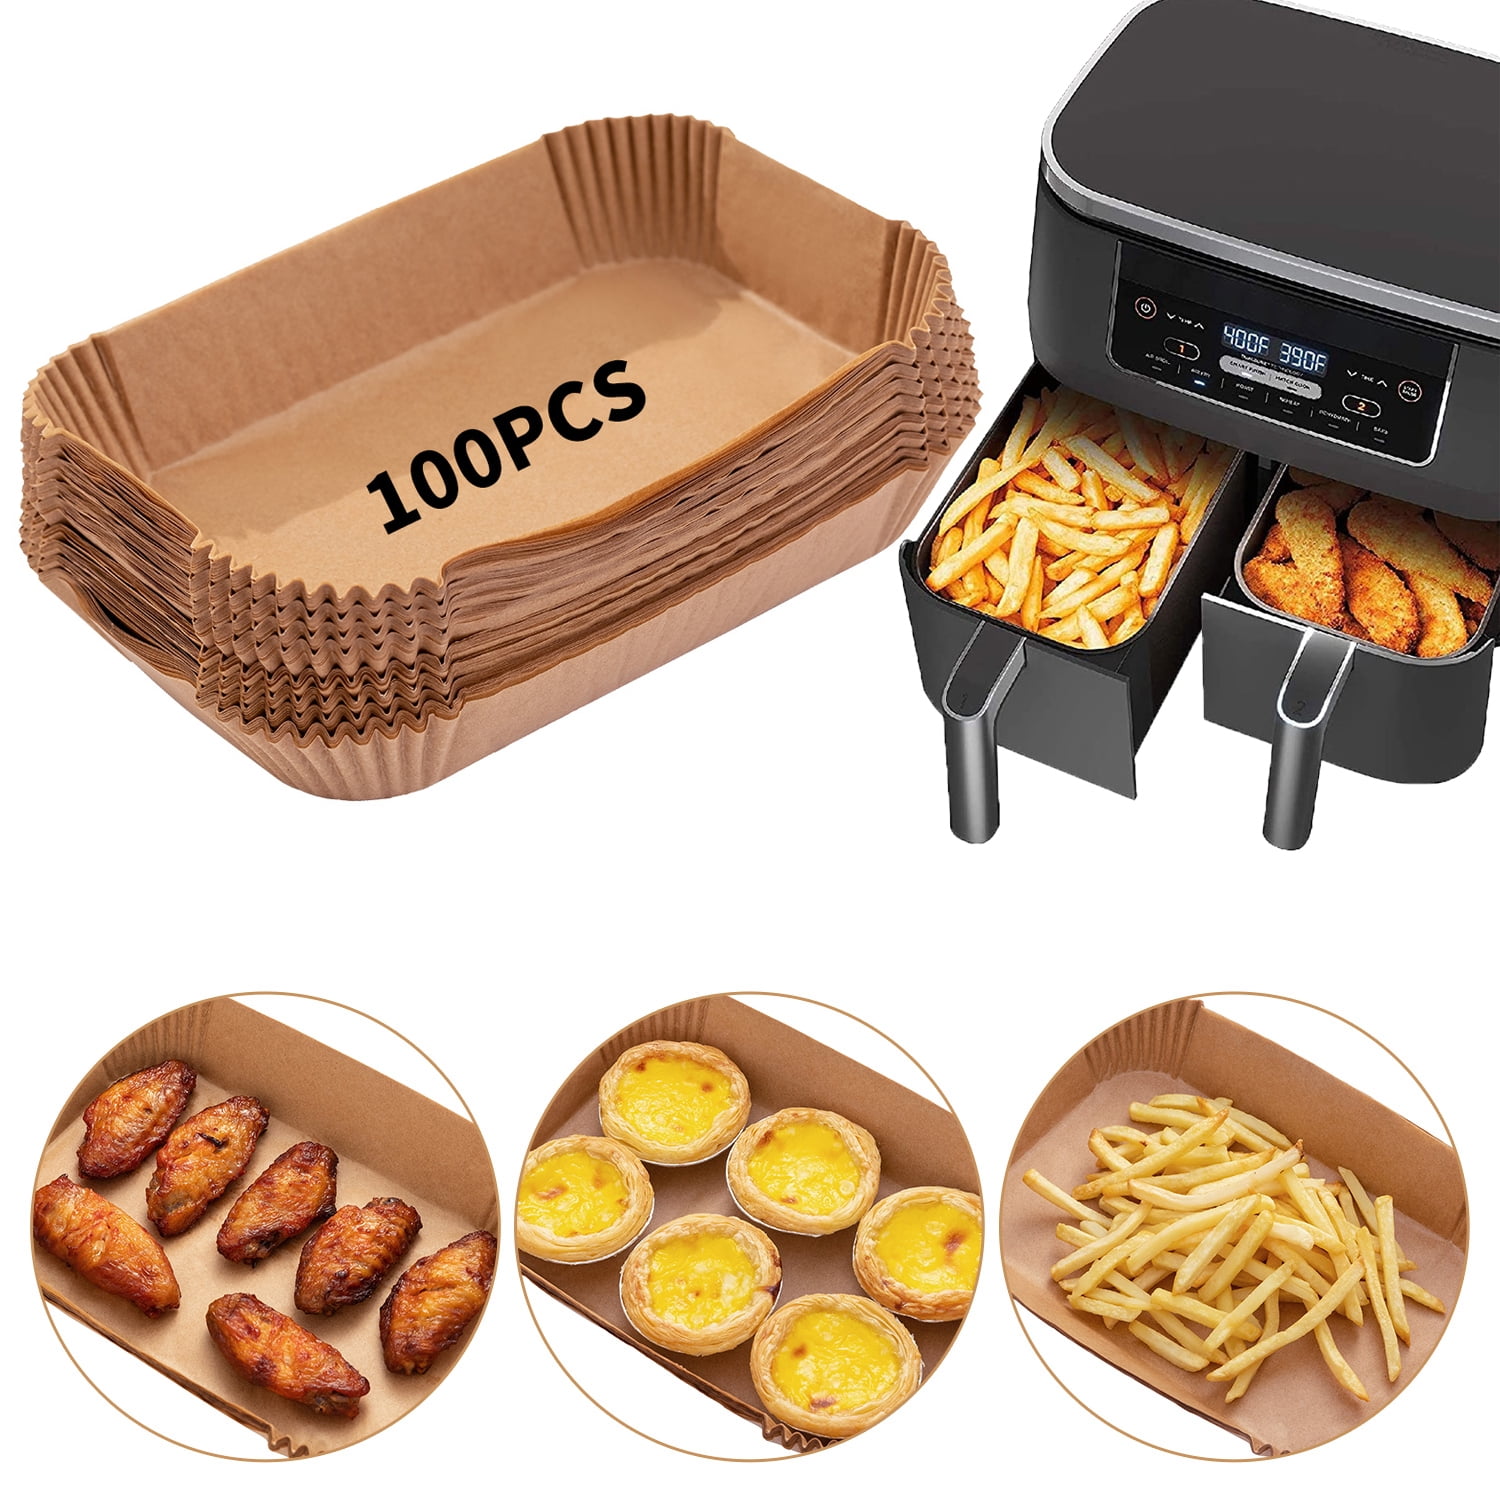 7 Set Air Fryer Bakeware Accessories For Ninja Foodi 5&6.5&8 Qt Op101